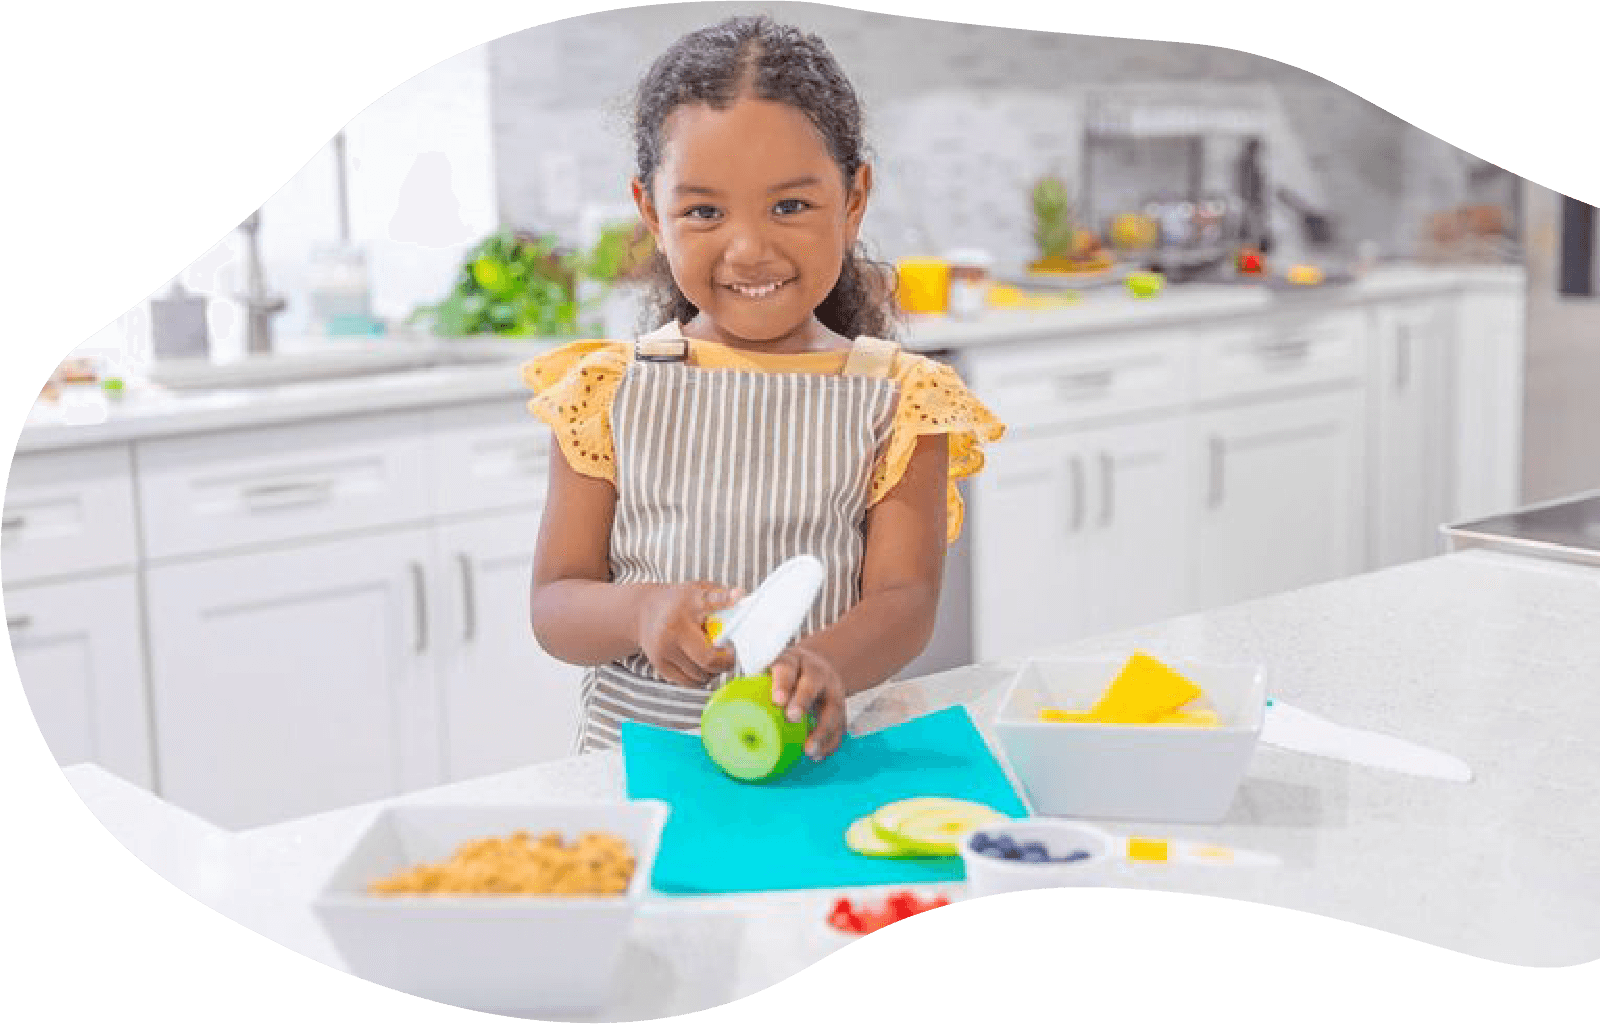 Tovla Jr. Kids Kitchen 3 Knife & Foldable Cutting Board Set Green 2pk -  20900974